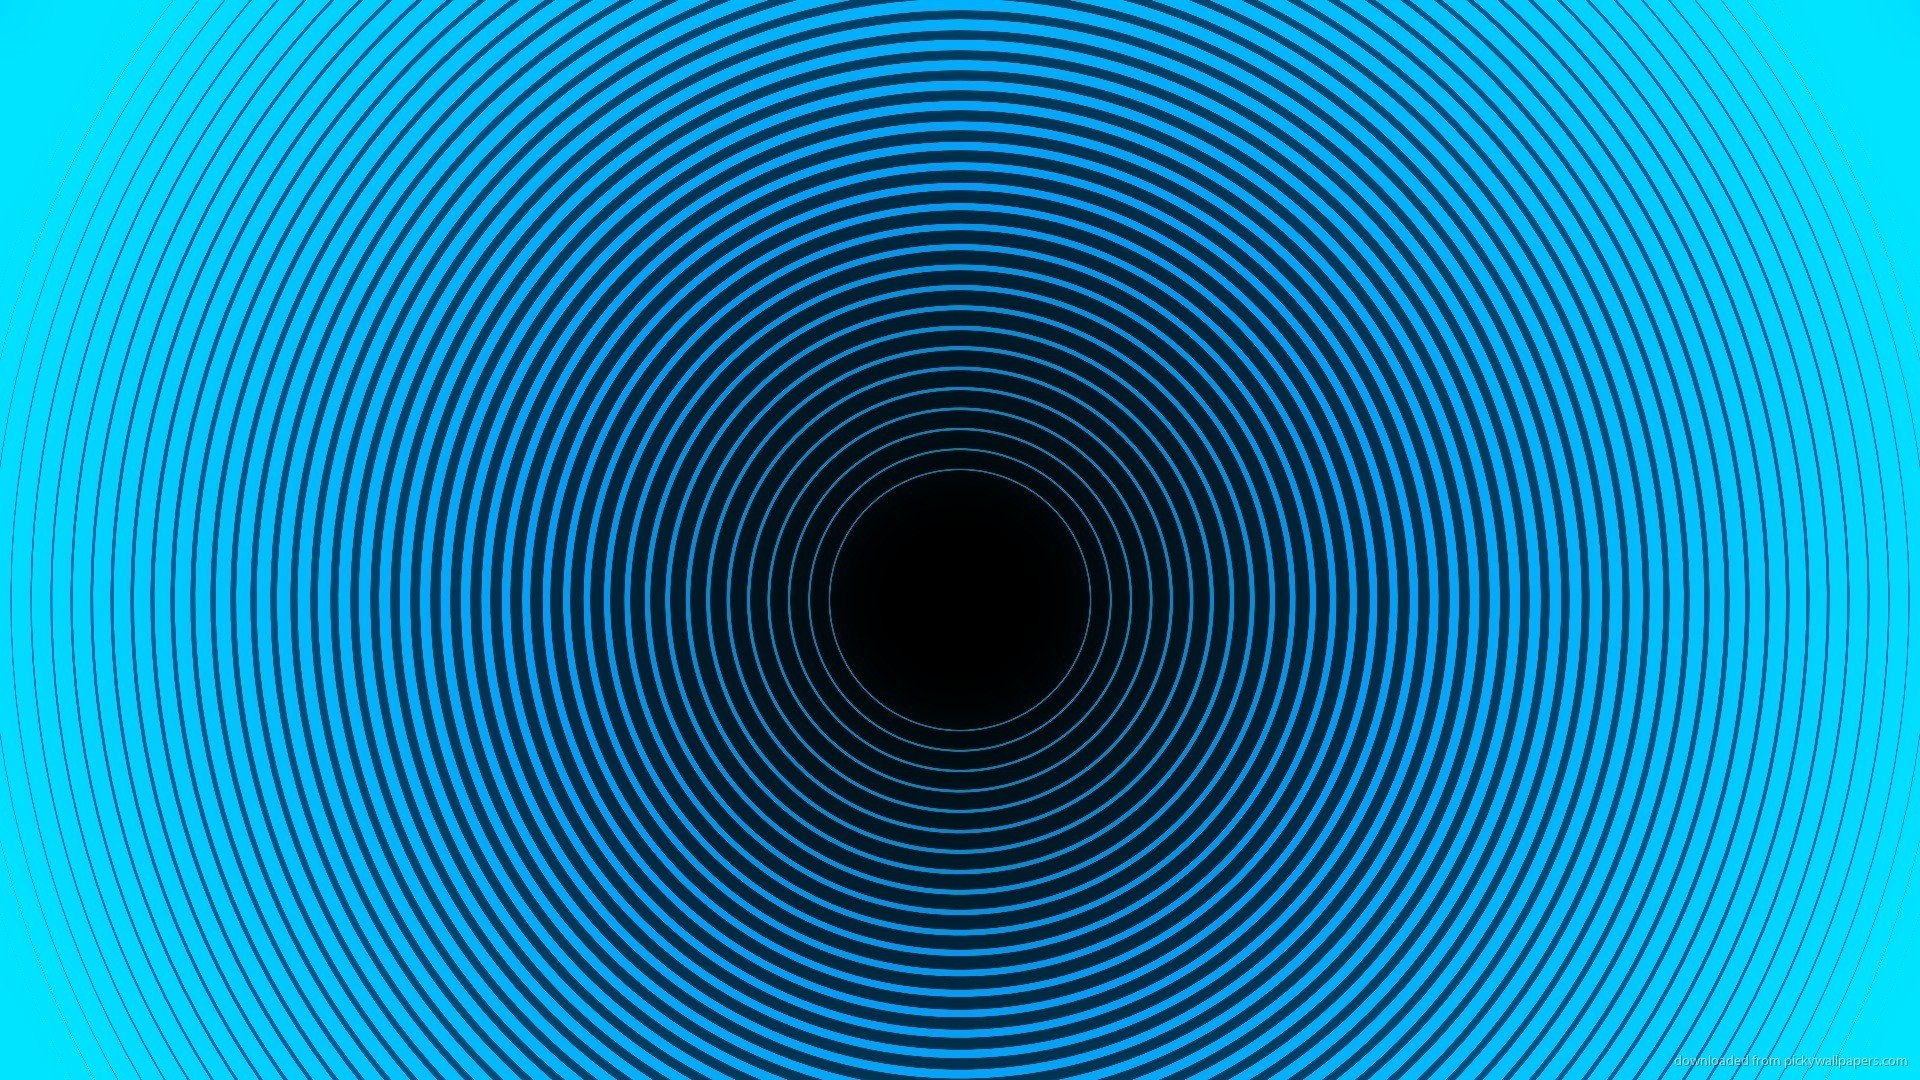 1920x1080  Blue and Black Optical Illusion Wallpaper wallpaper